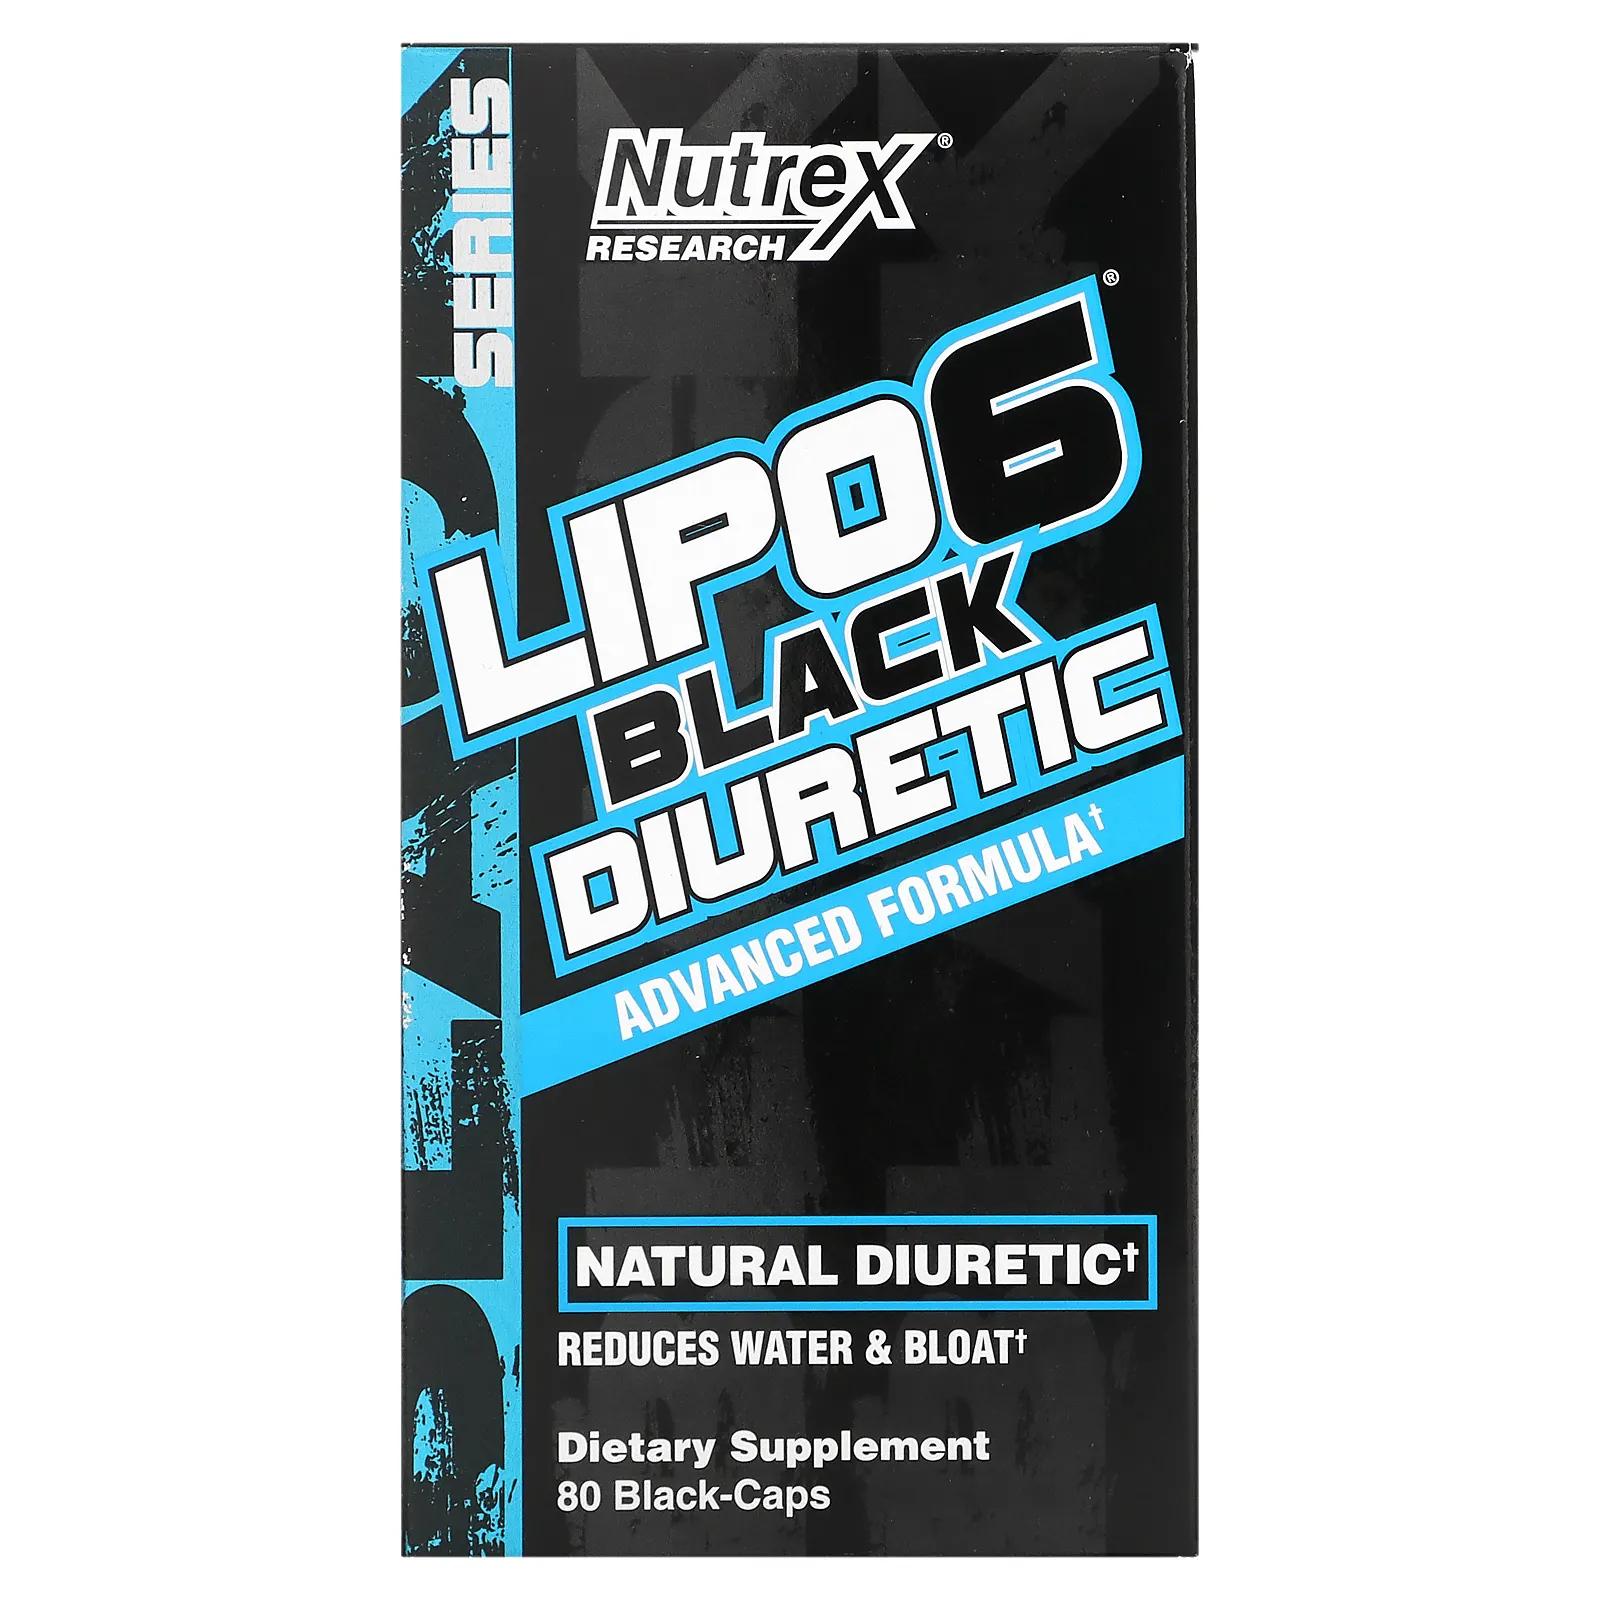 Nutrex Research LIPO-6 Black Diuretic 80 Black-Caps nutrex research isofit шоколадный коктейль 993 г 2 2 фунта